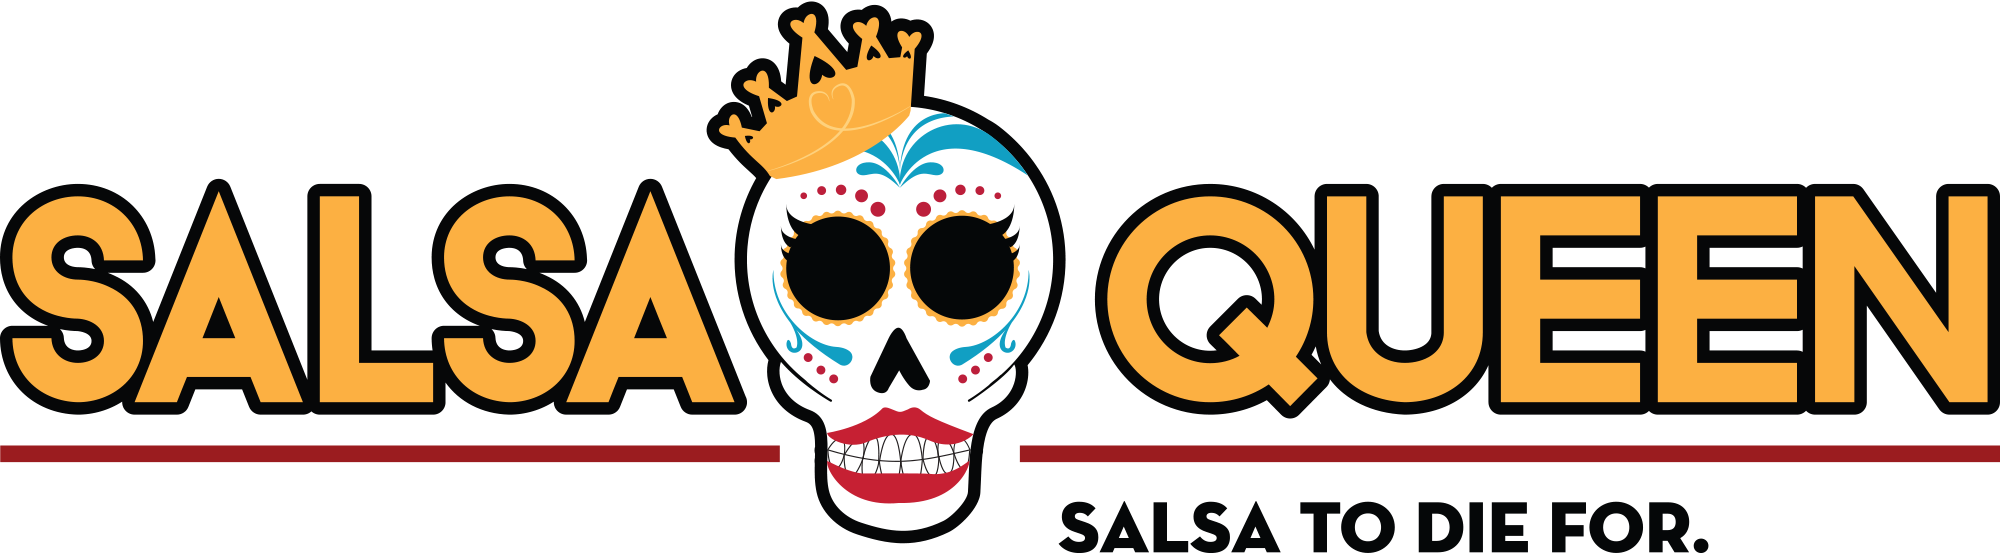 Salsa Queen coupons logo